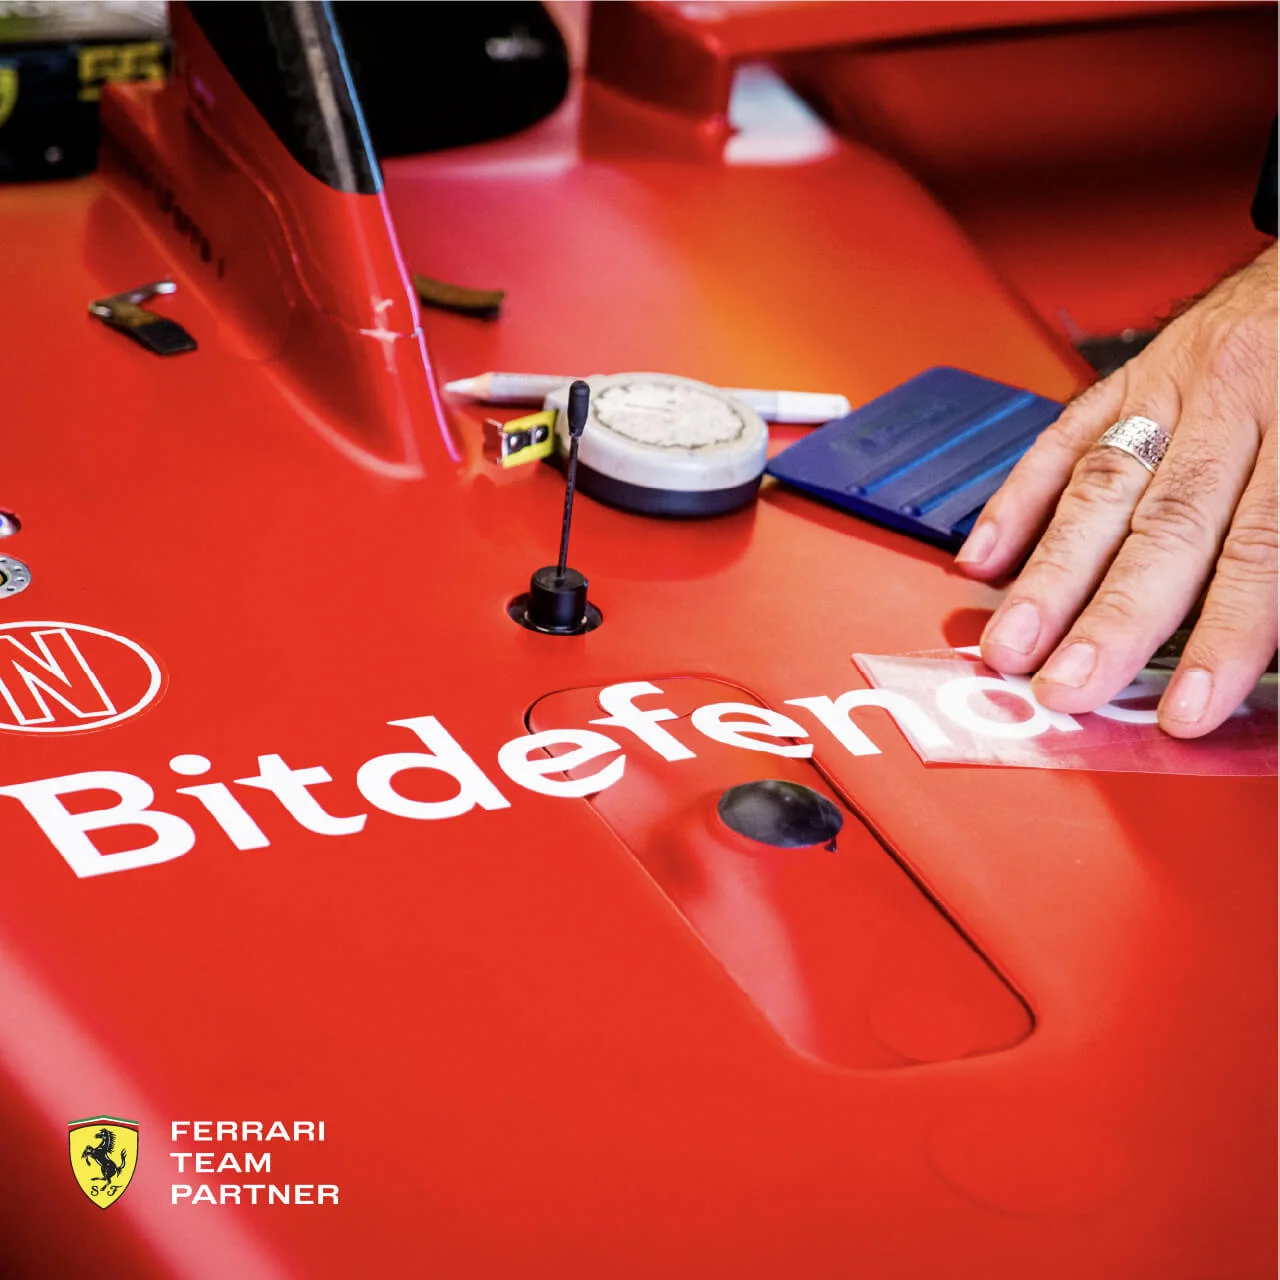 Bitdefender розширює партнерство в галузі кібербезпеки з Ferrari